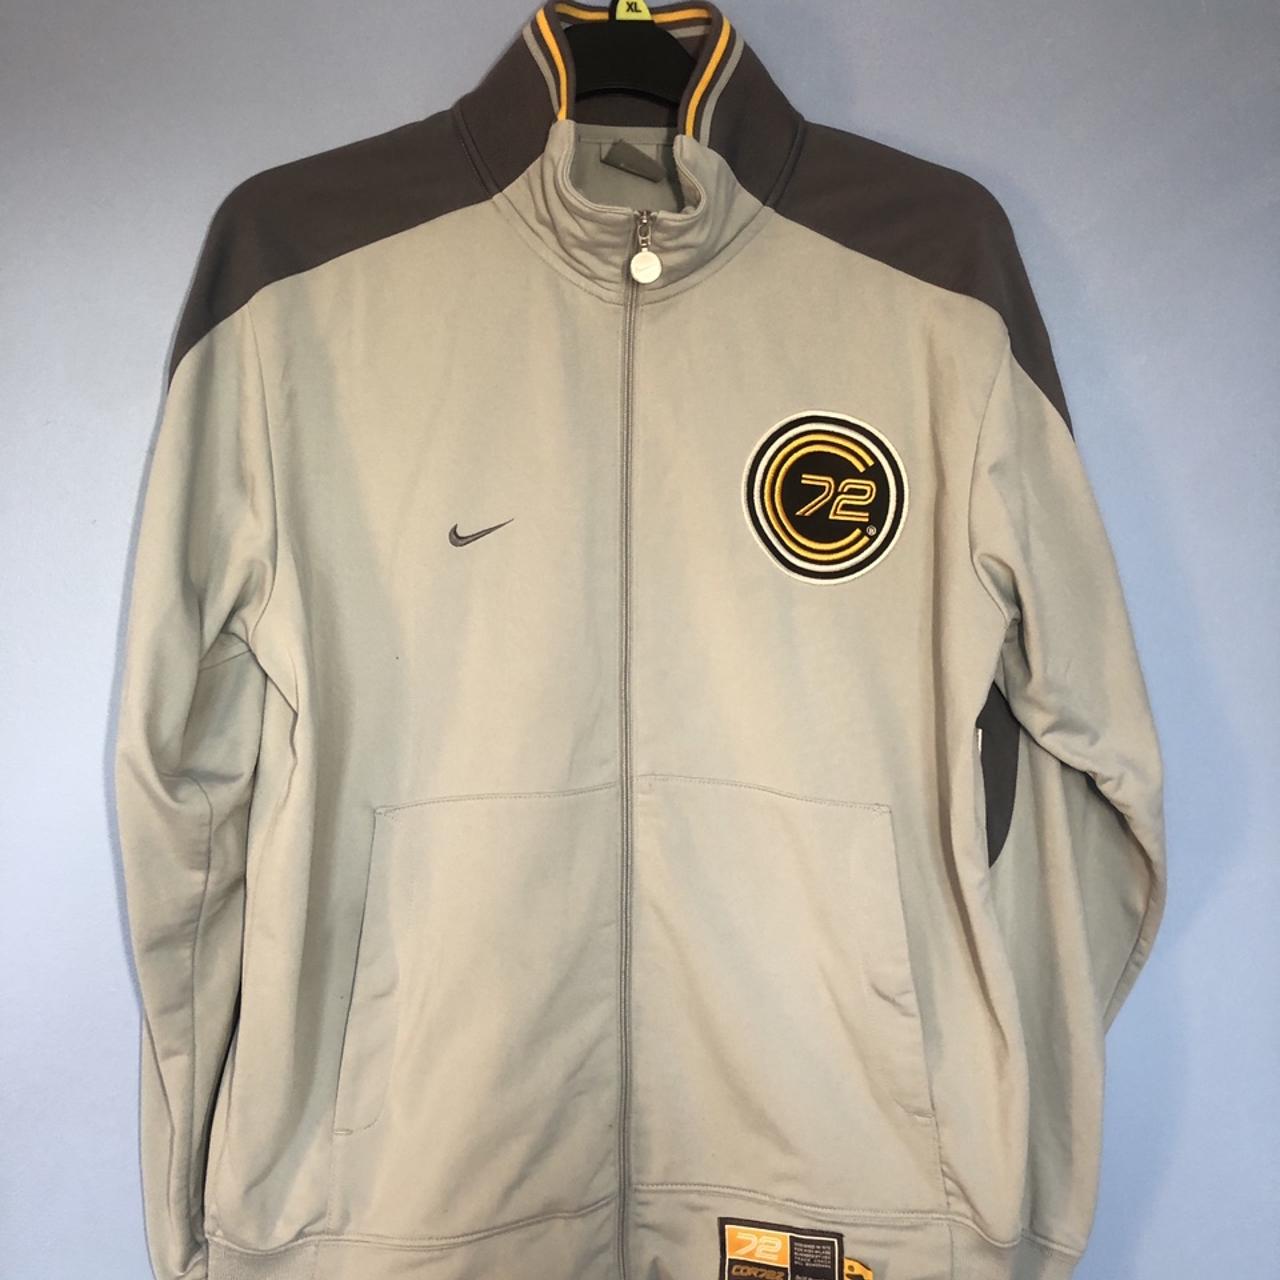 Nike COR72Z Vintage Retro Jacket All jackets are... - Depop